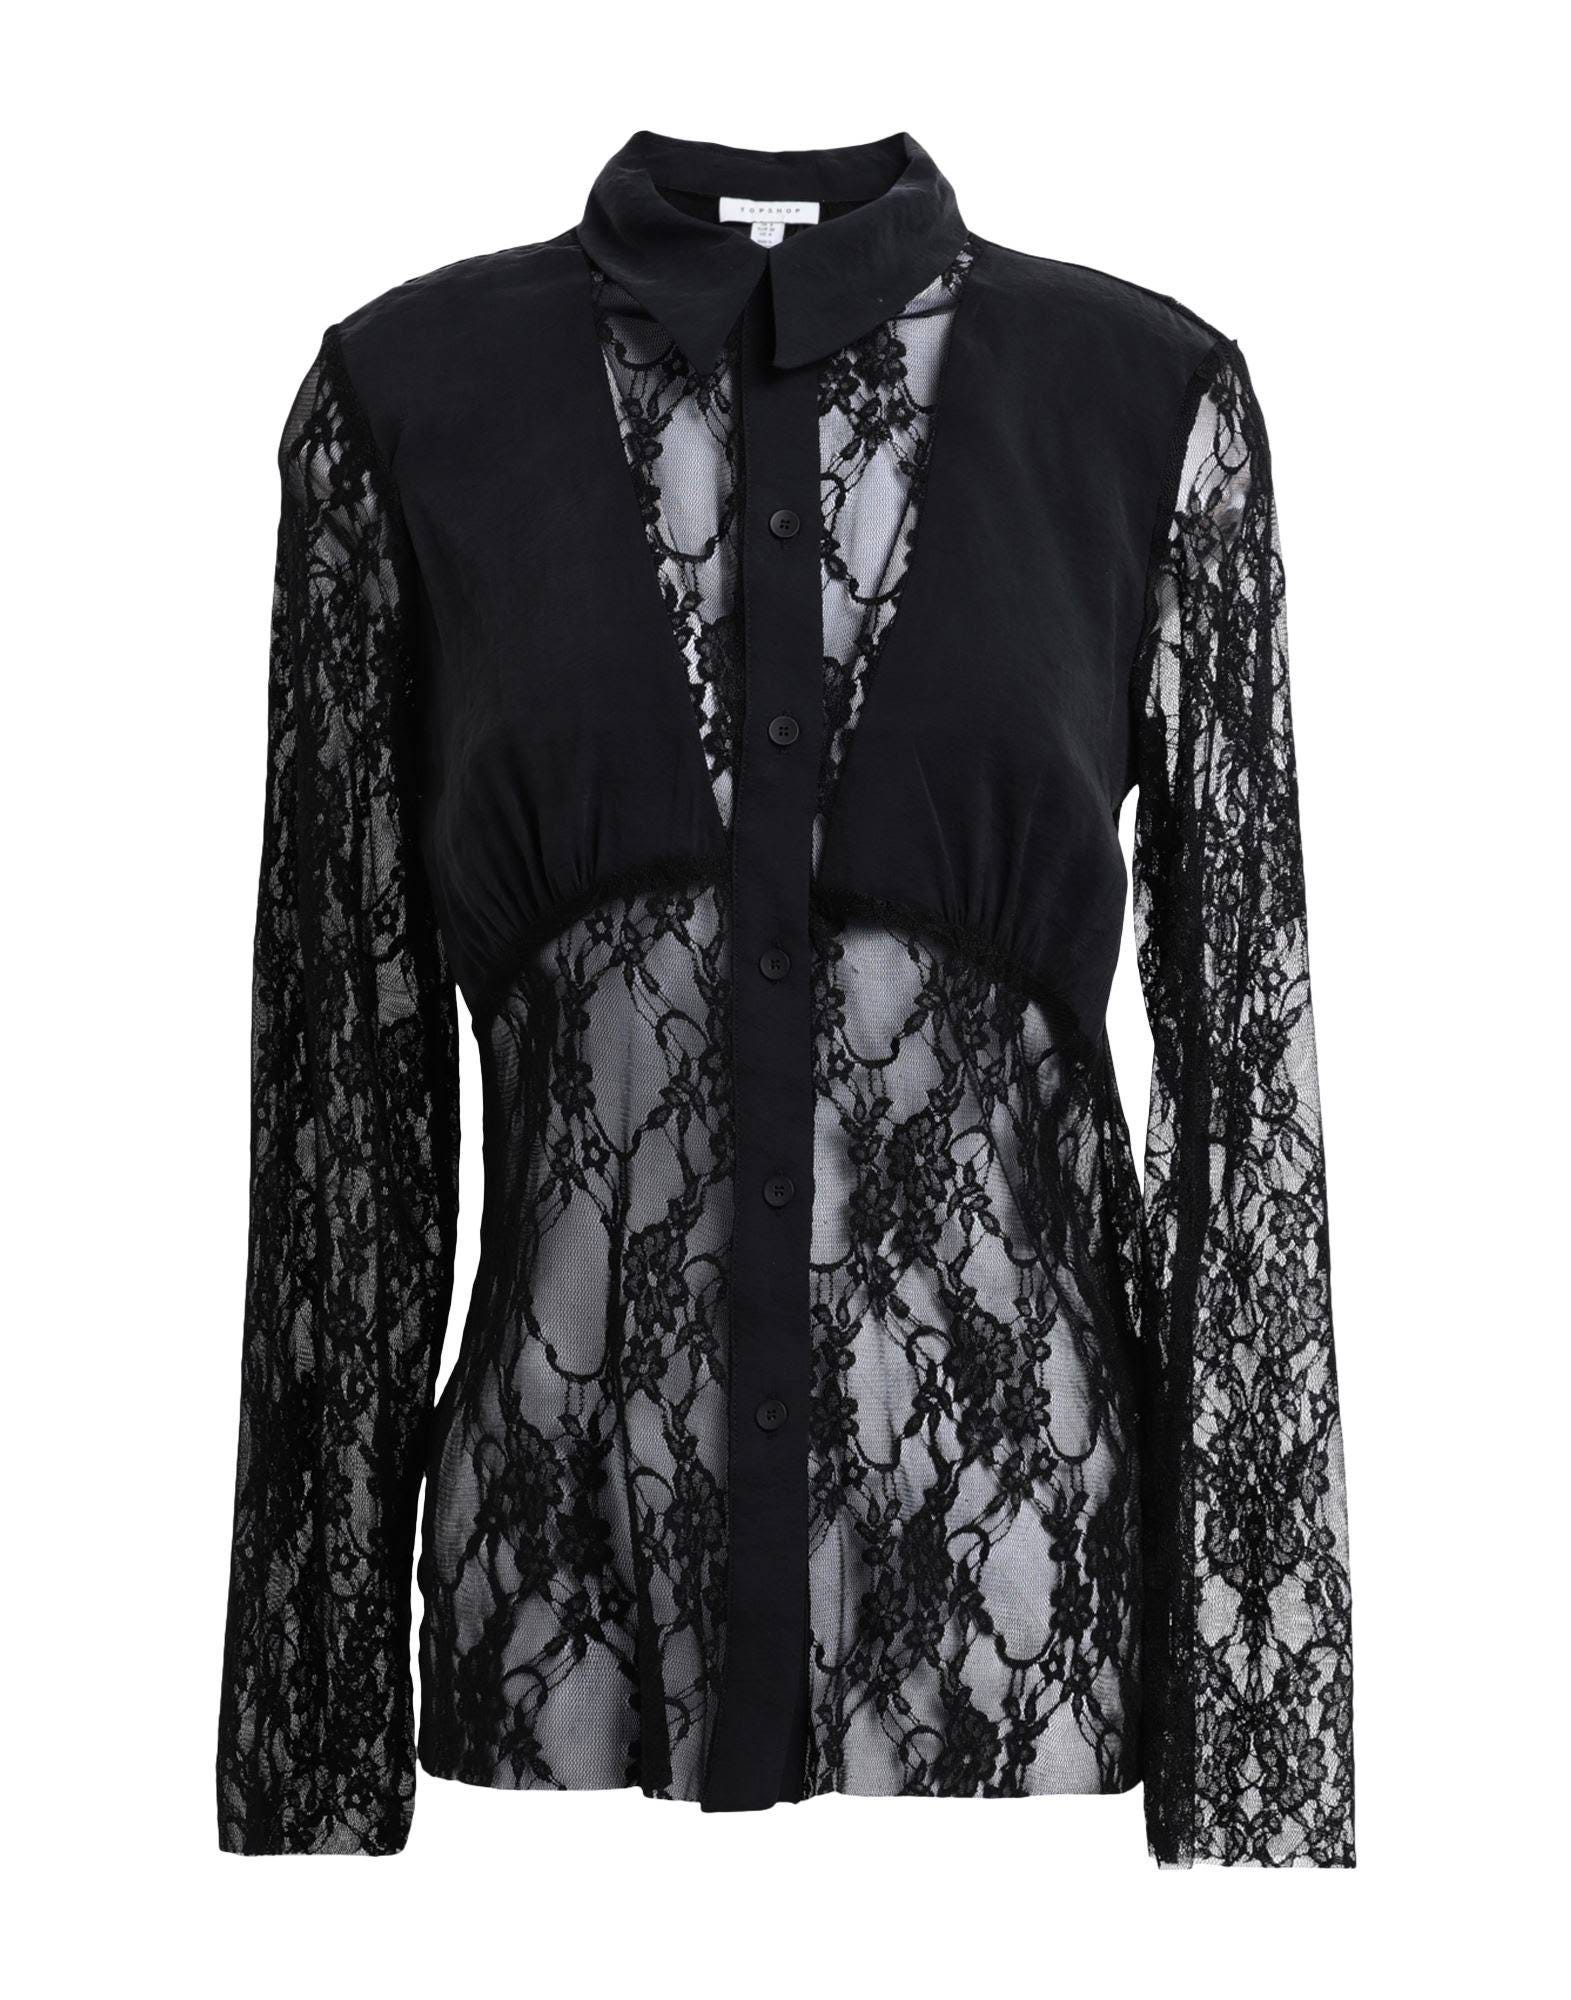 Elegant Black Lace Sheer Blouse | Image